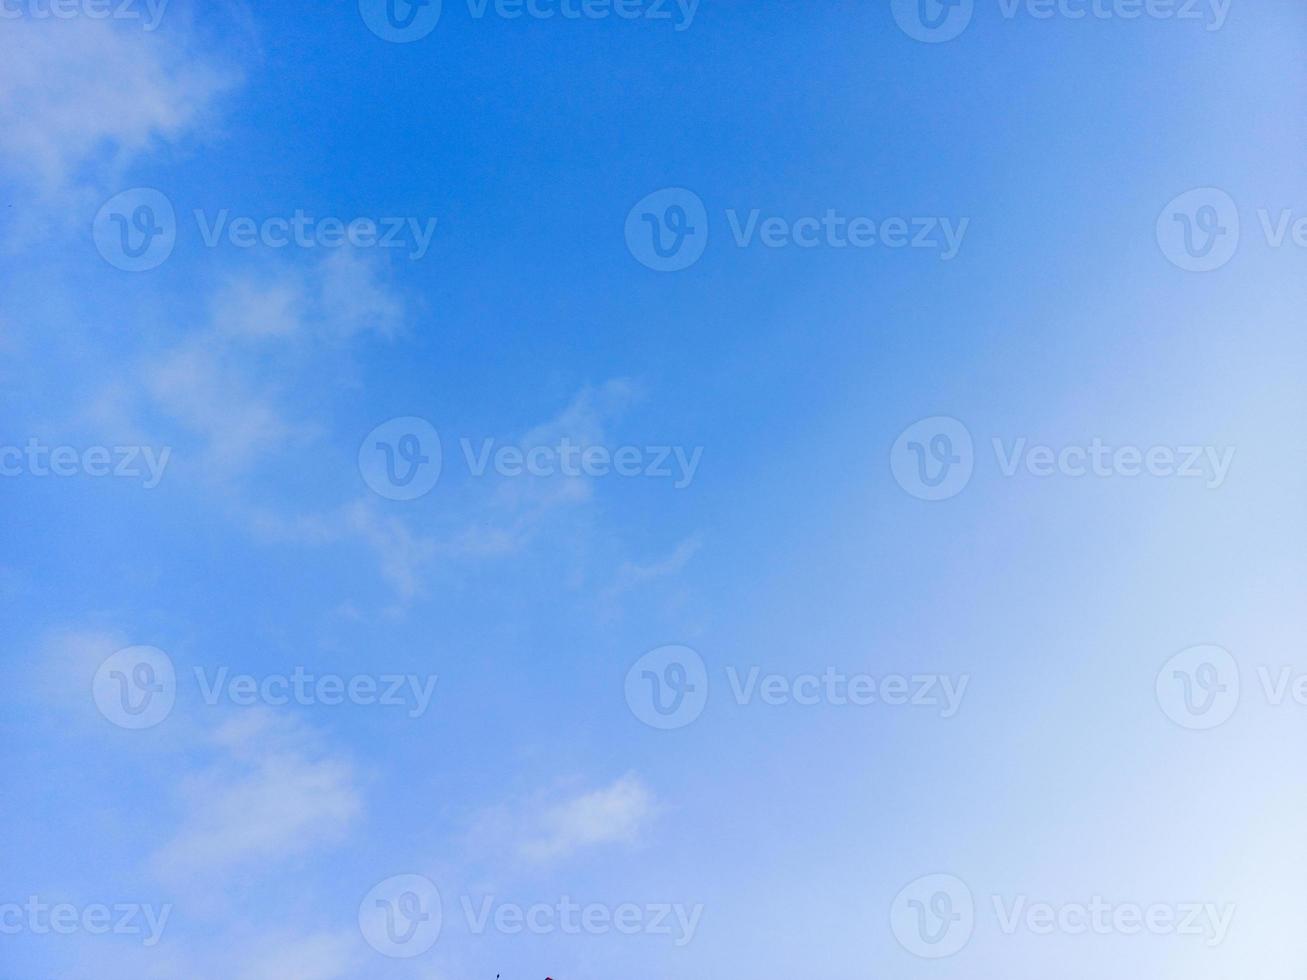 paranomic de cielo azul con nubes transparentes suaves foto